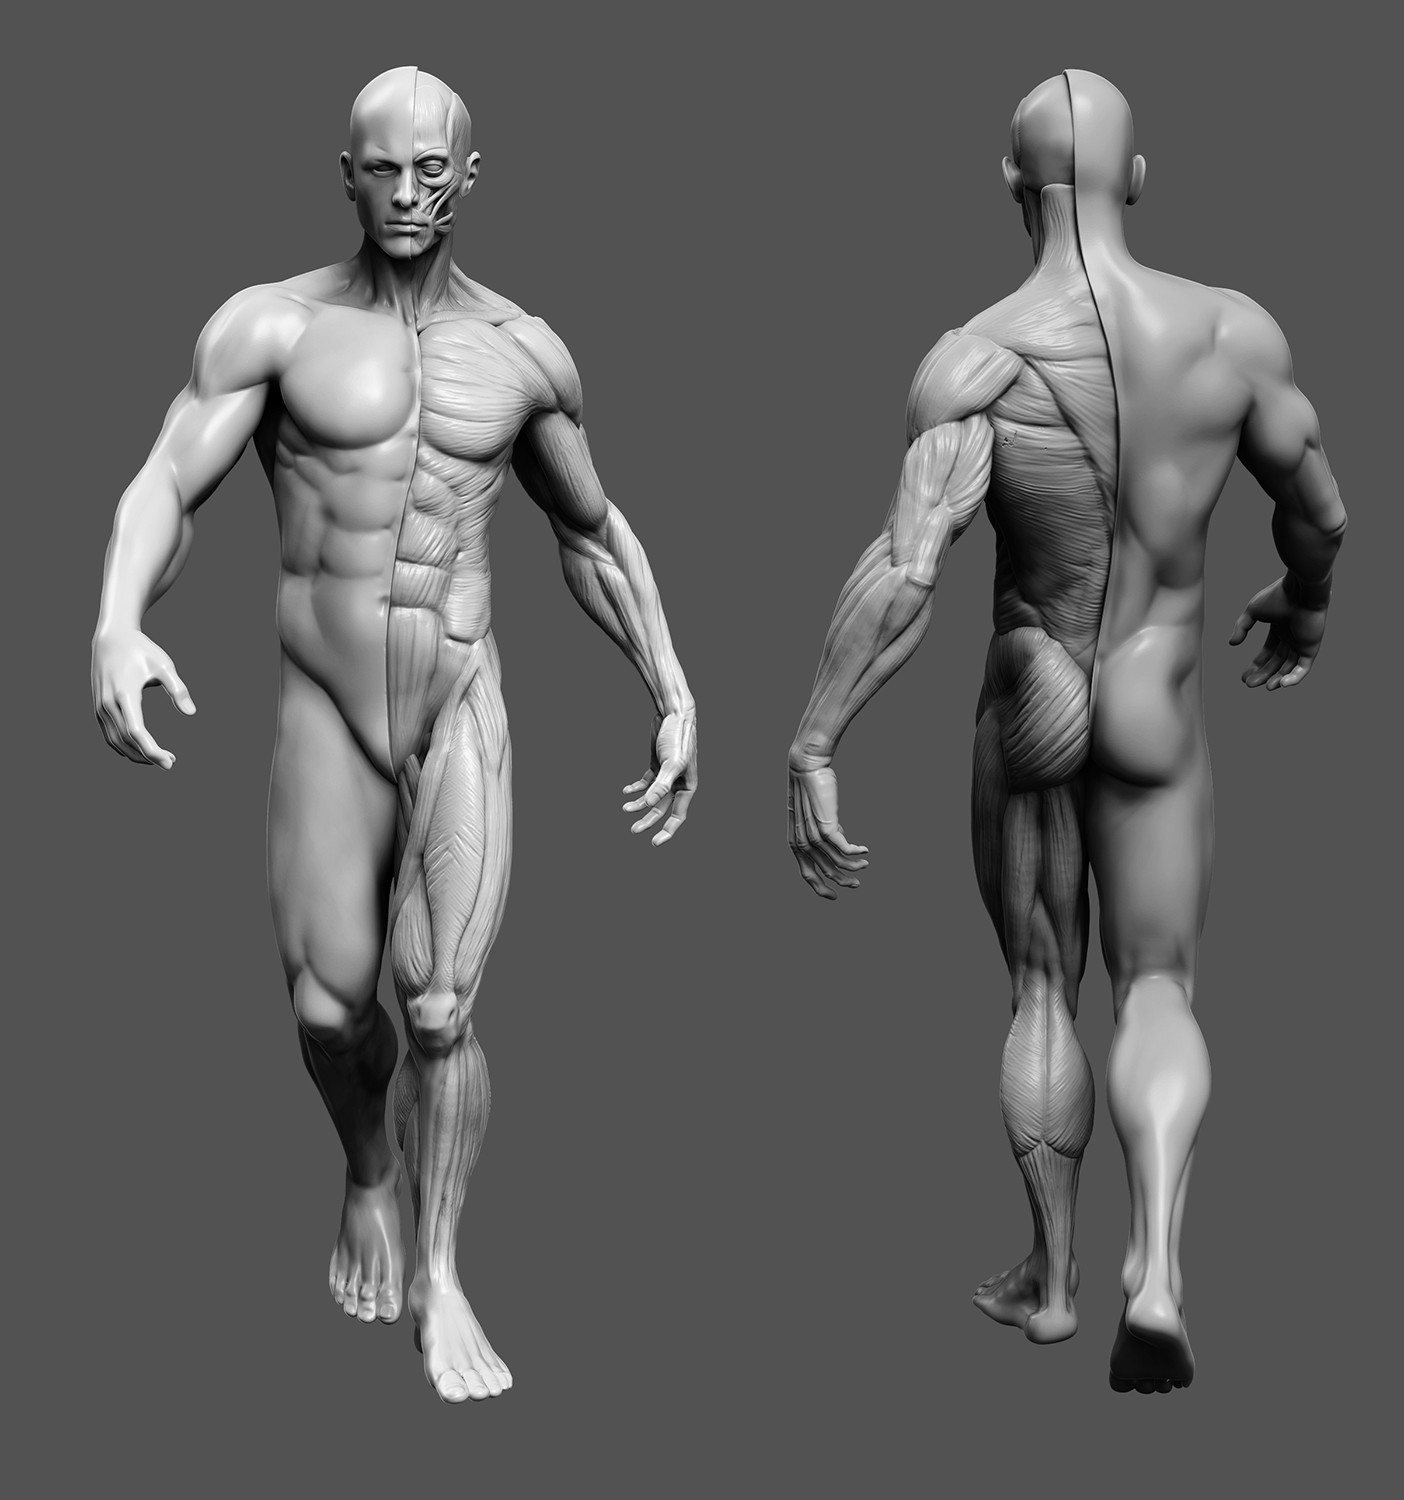 Референс человека. Анатомия тела мужчины референс. Анатомия человека мышцы референс. Мужчина анатомия референс. Тело анатомия референс муж.